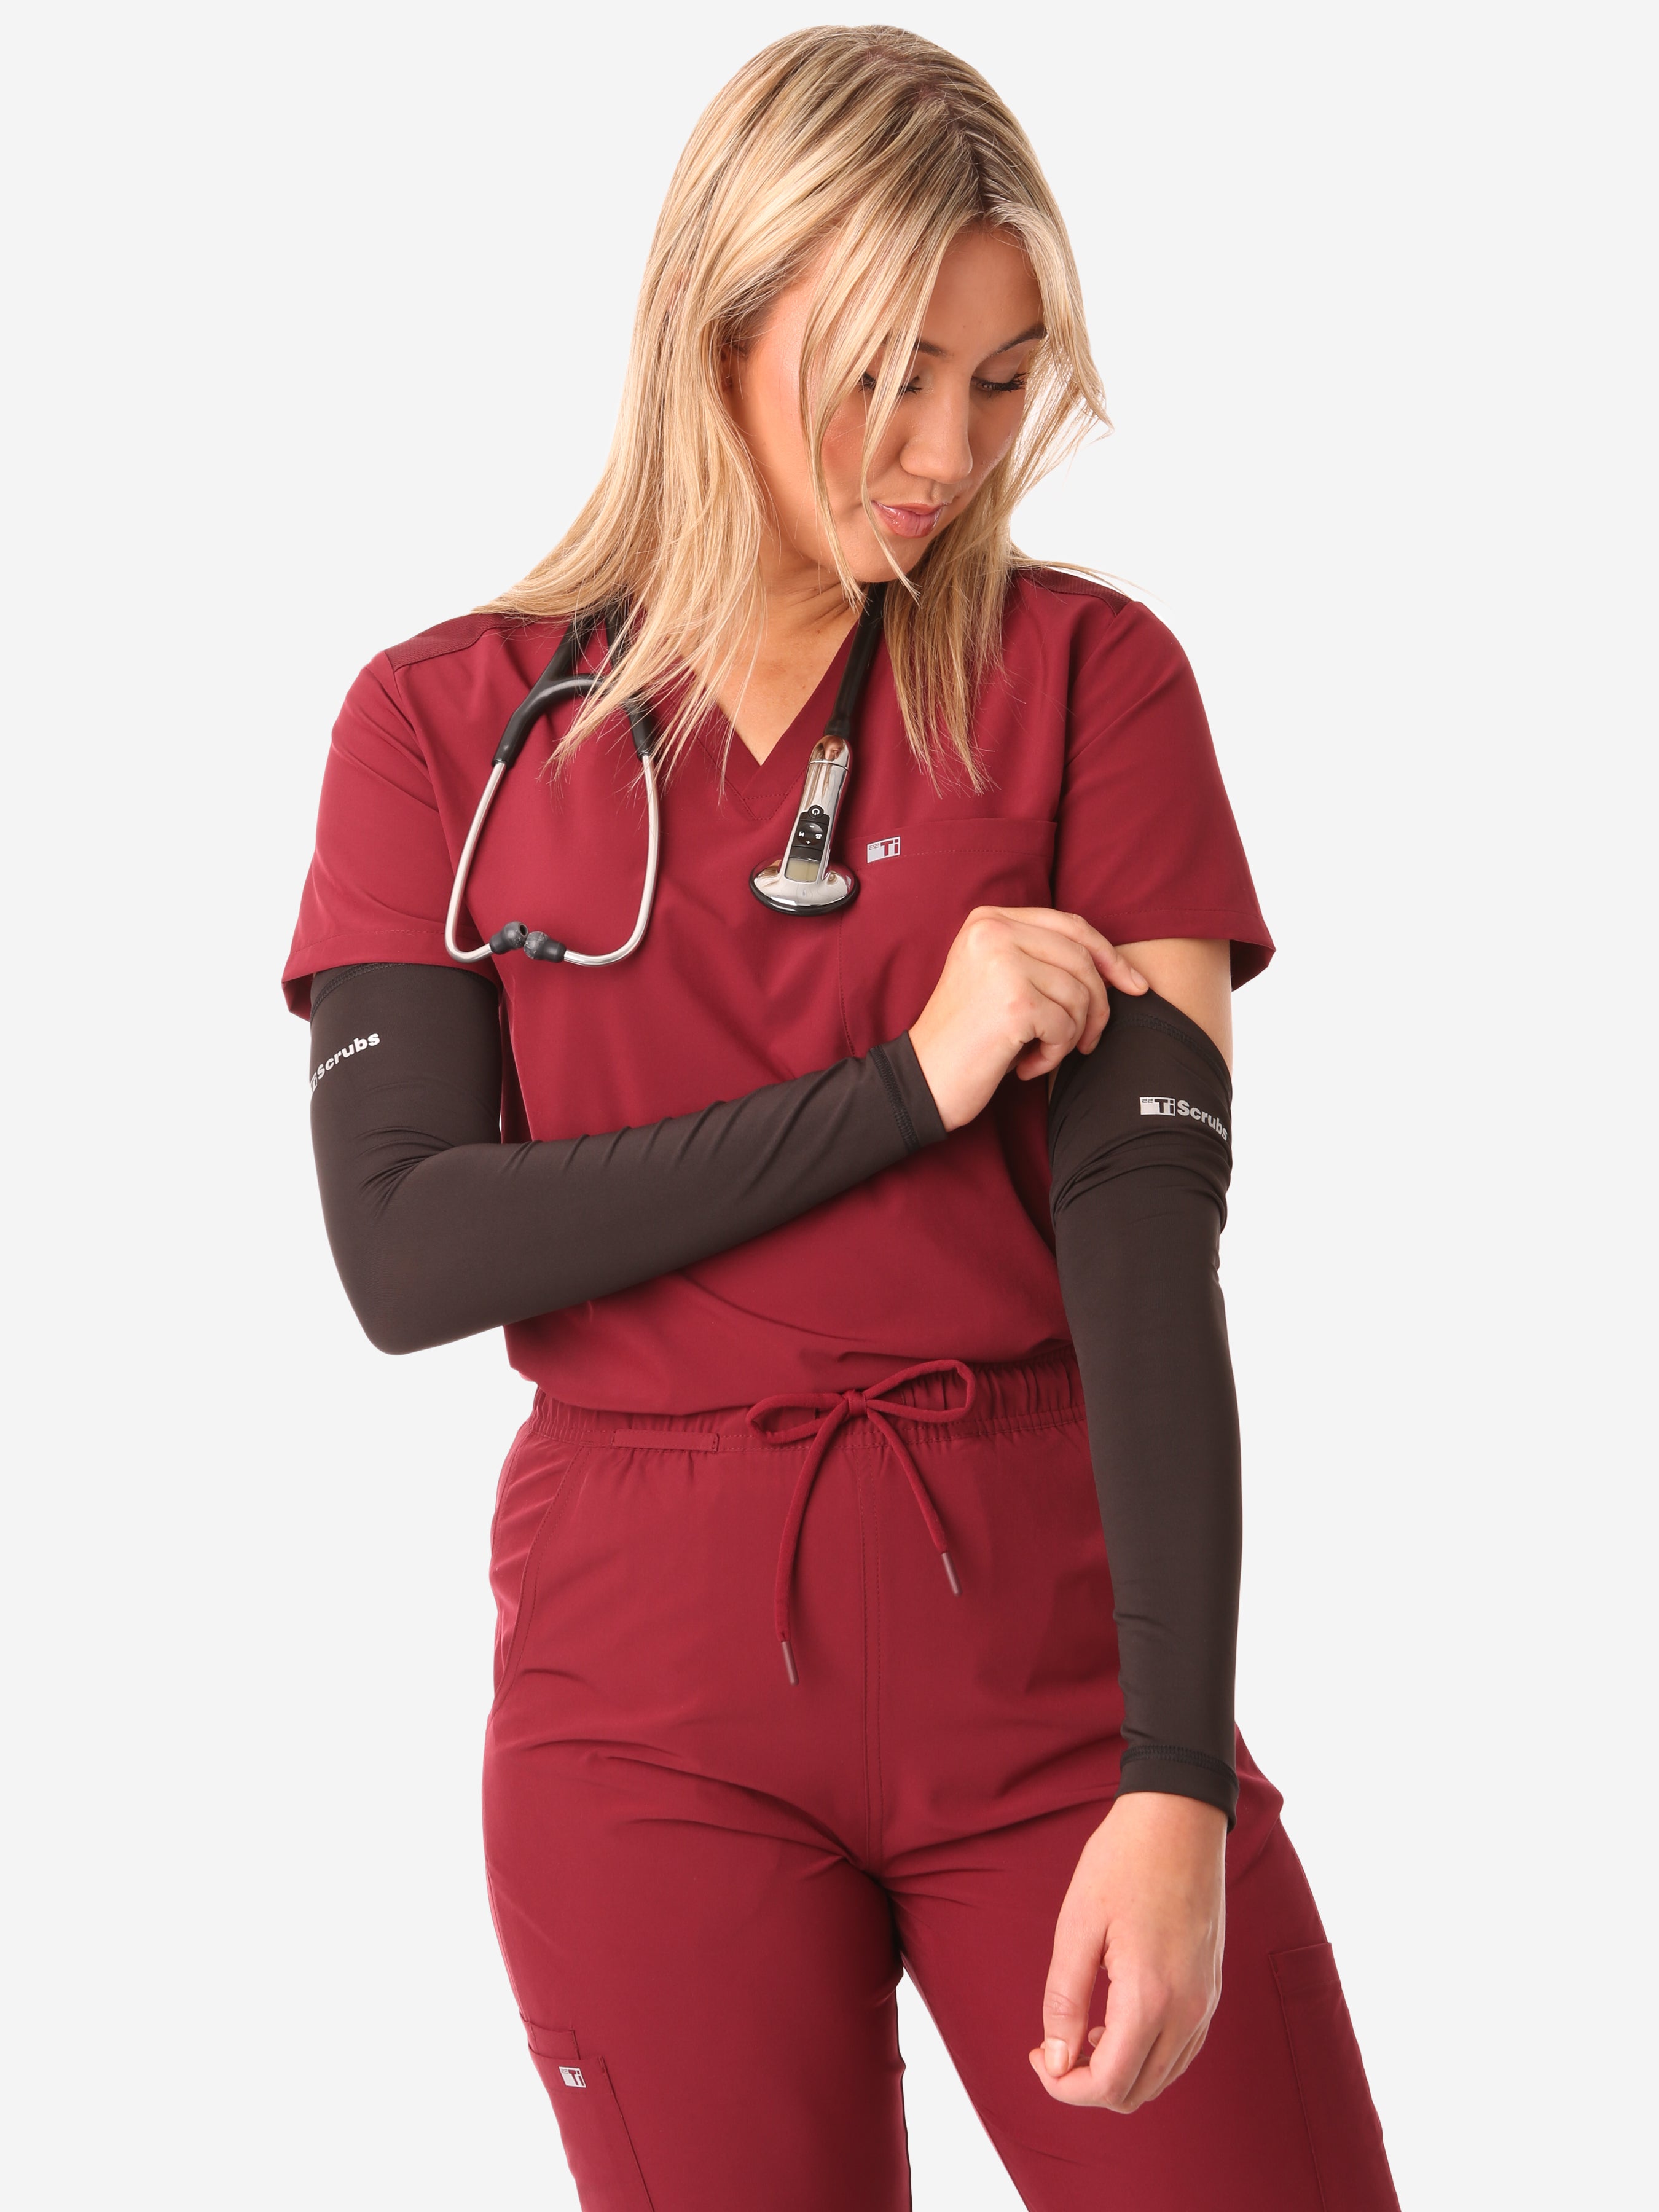 Medical Arm Sleeves – TiScrubs